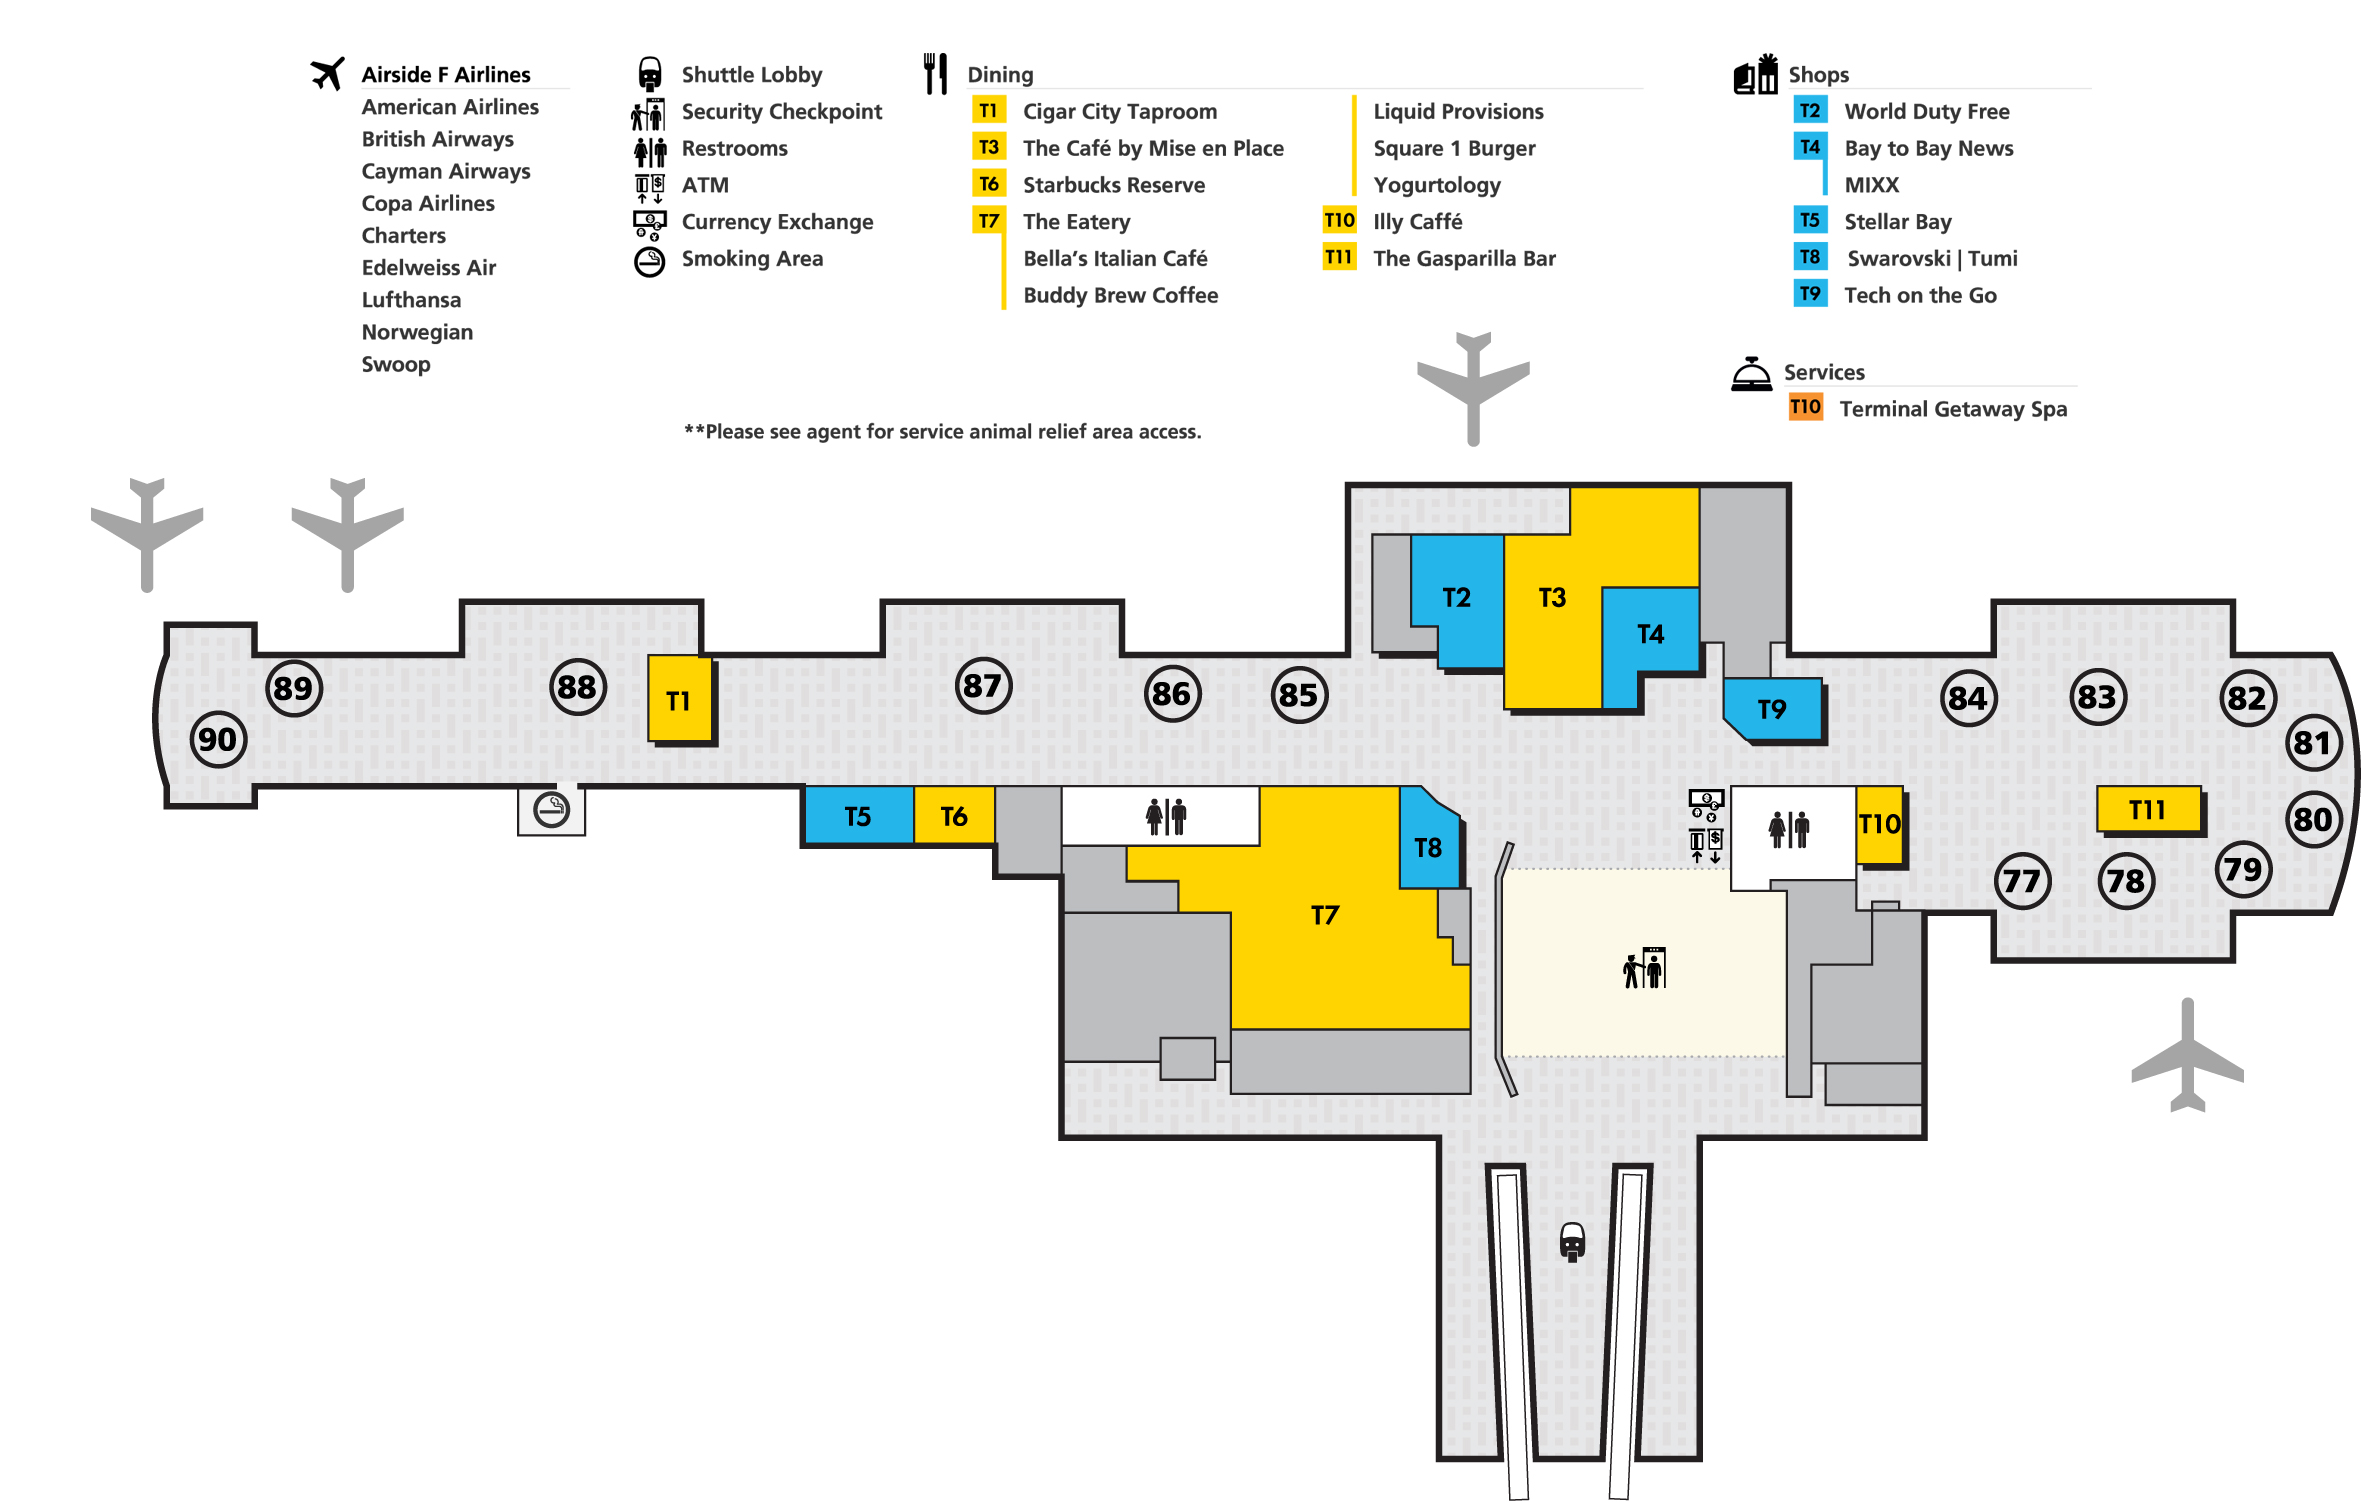 Tampa Airport Map (TPA) - Printable Terminal Maps, Shops, Food